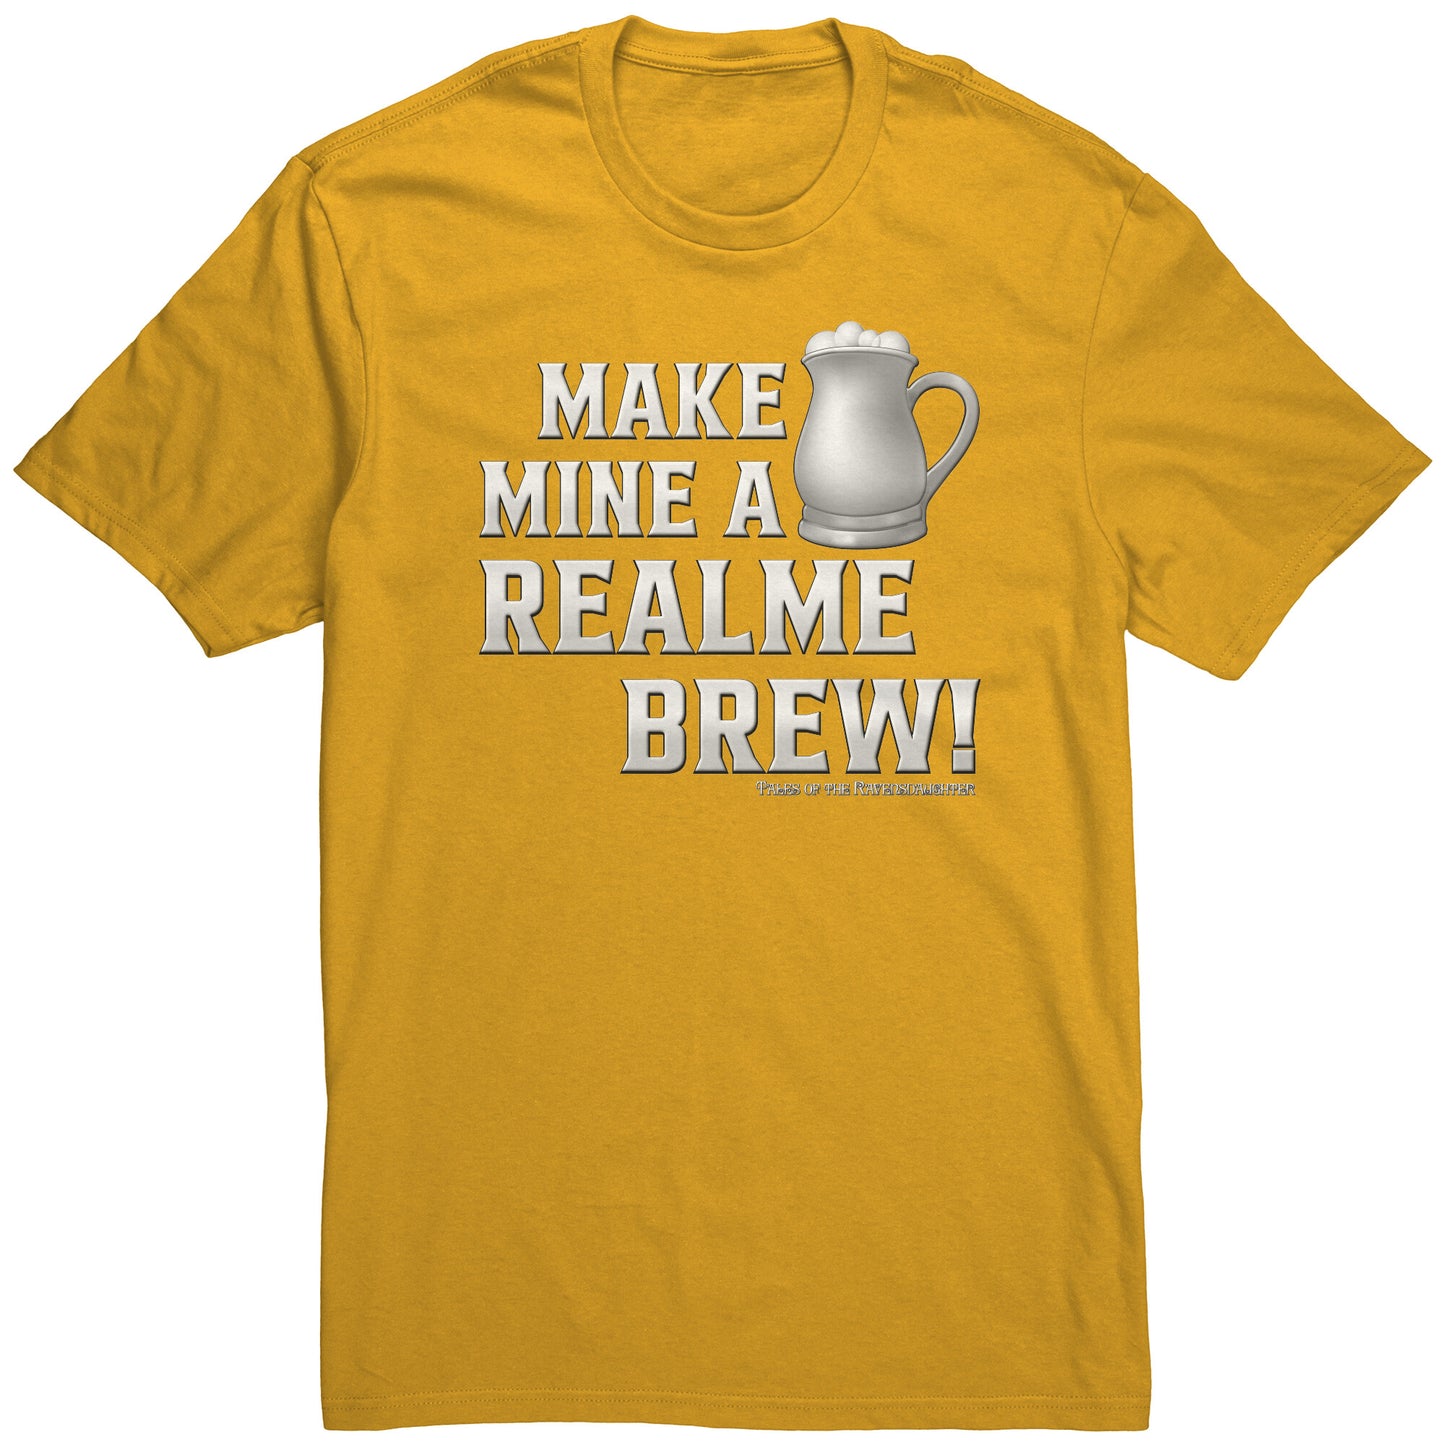 Make Mine A Realme Brew! Men's T-Shirt - Yellow-Orange-Red